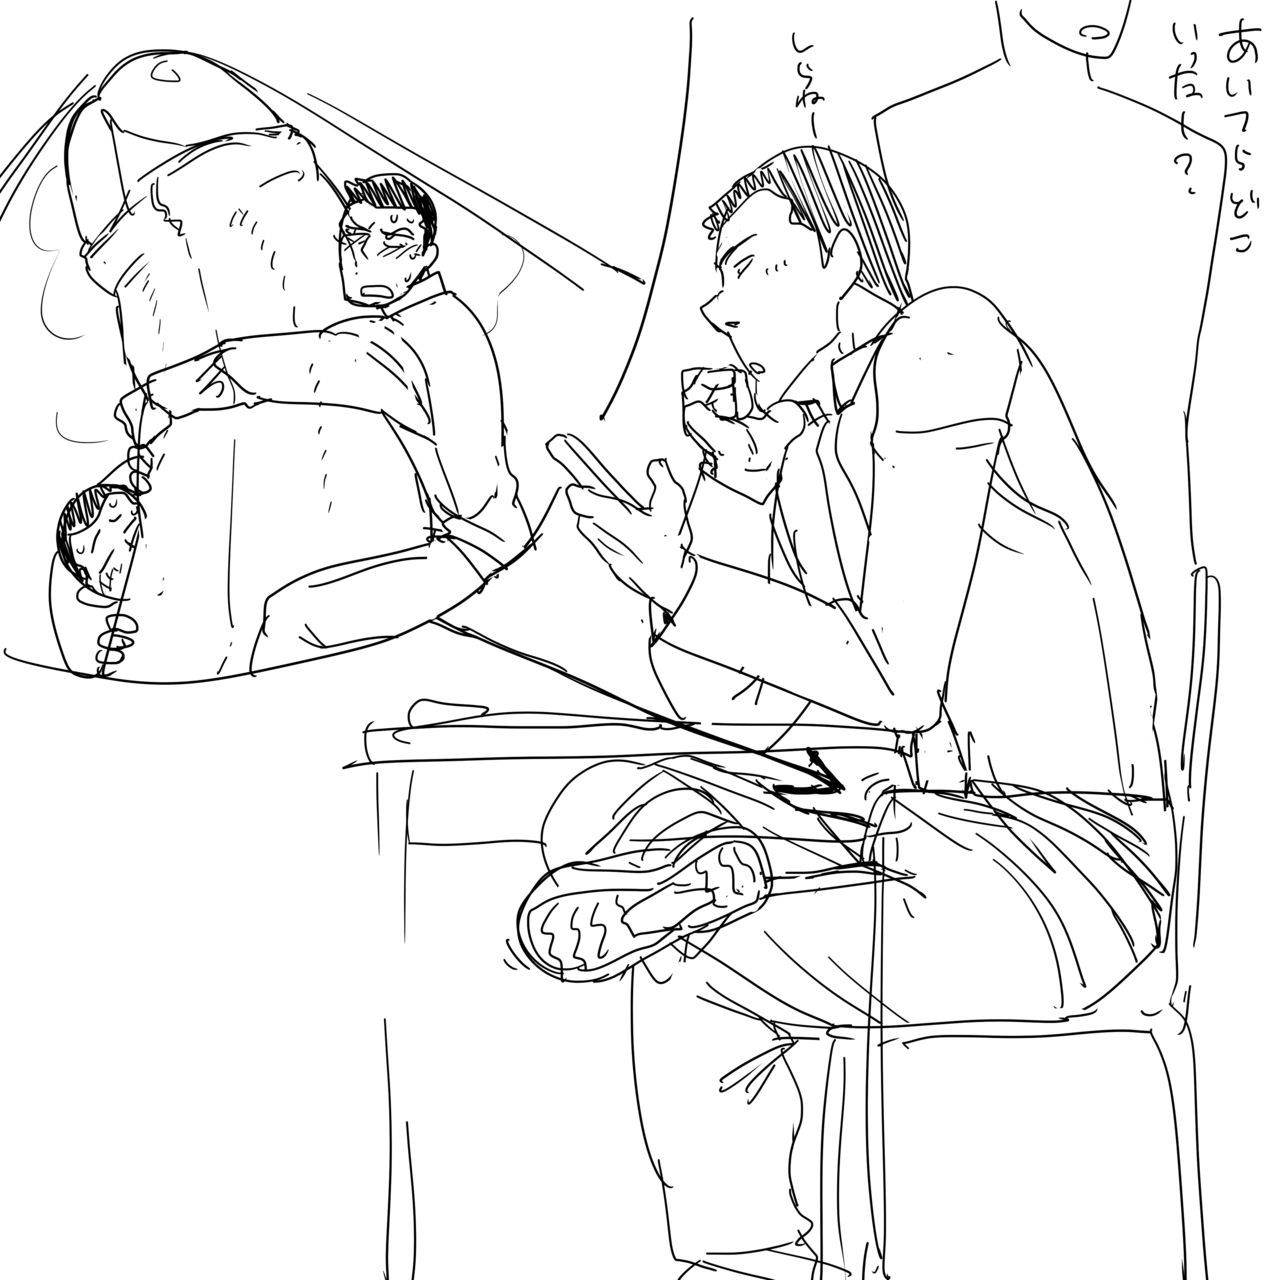 [Gakuranman/Chijimetaro] Artworks and animations (male giants) 297